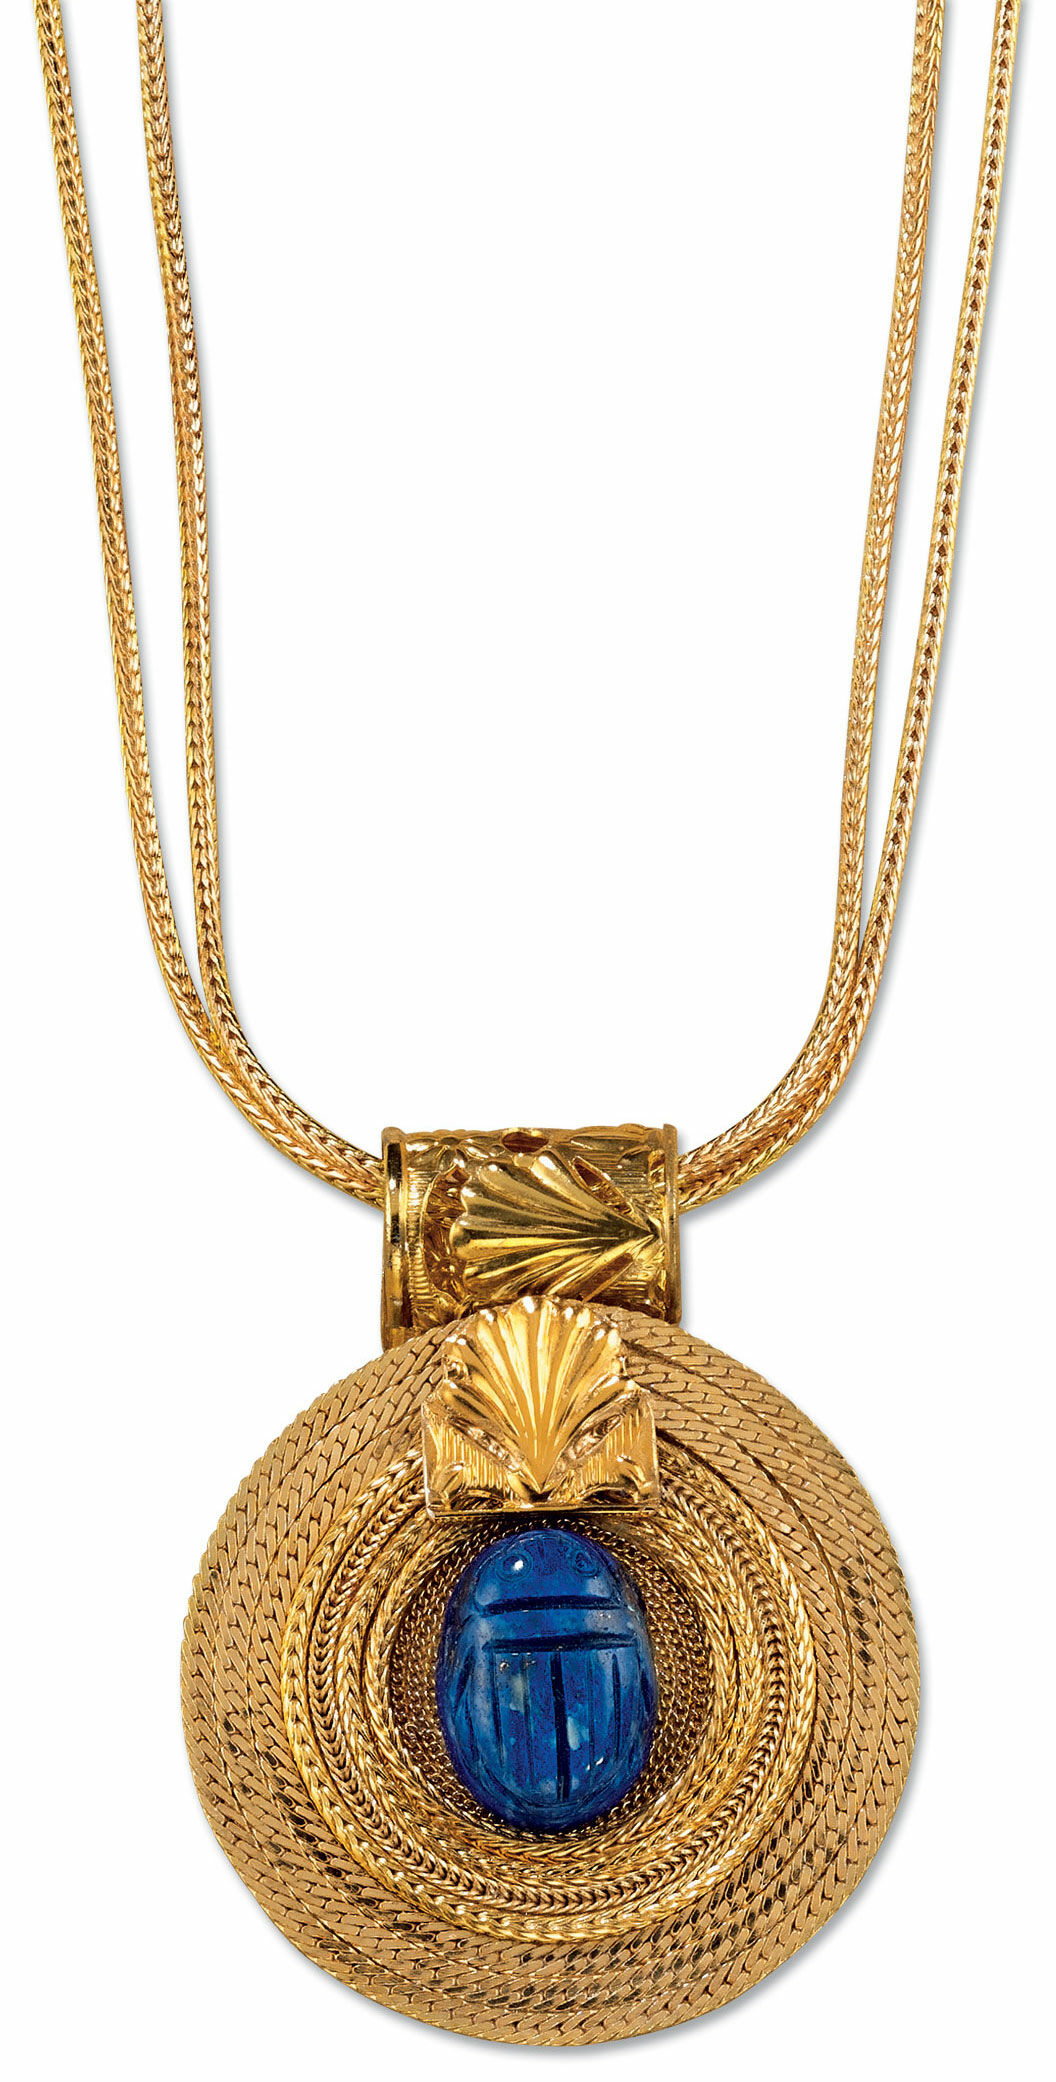 Necklace "Sun Wheel with Lapis Lazuli Scarab" by Petra Waszak